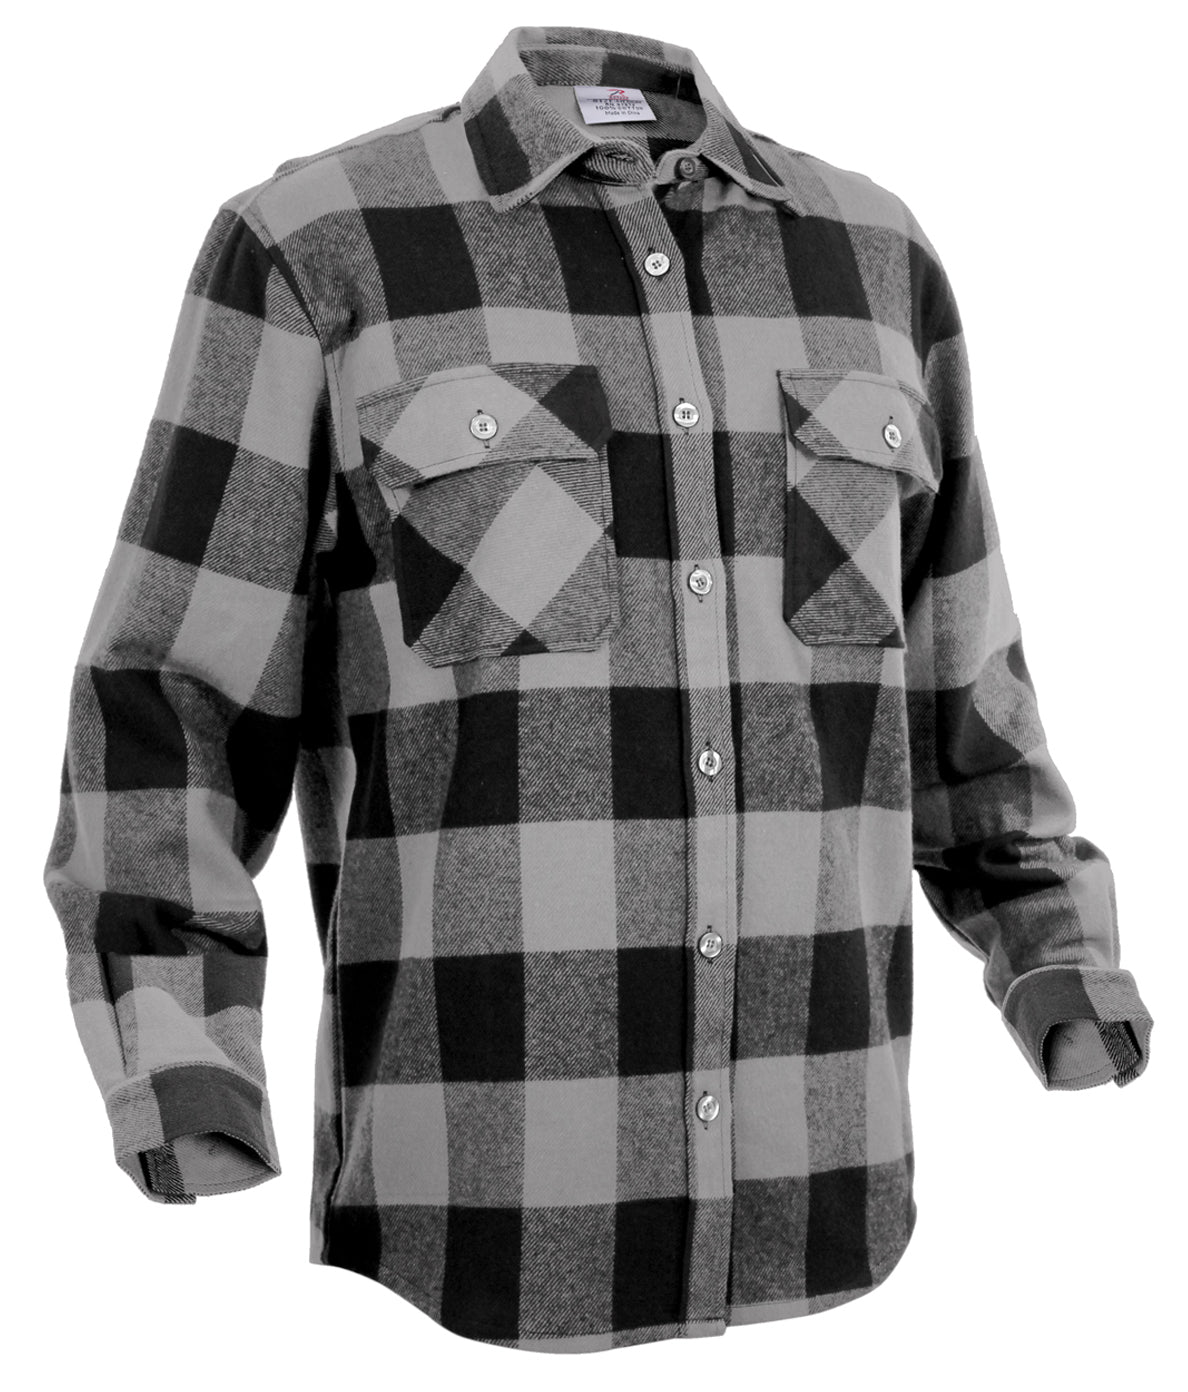 Braveman Men's Buffalo Plaid Button Down Flannel Shirt